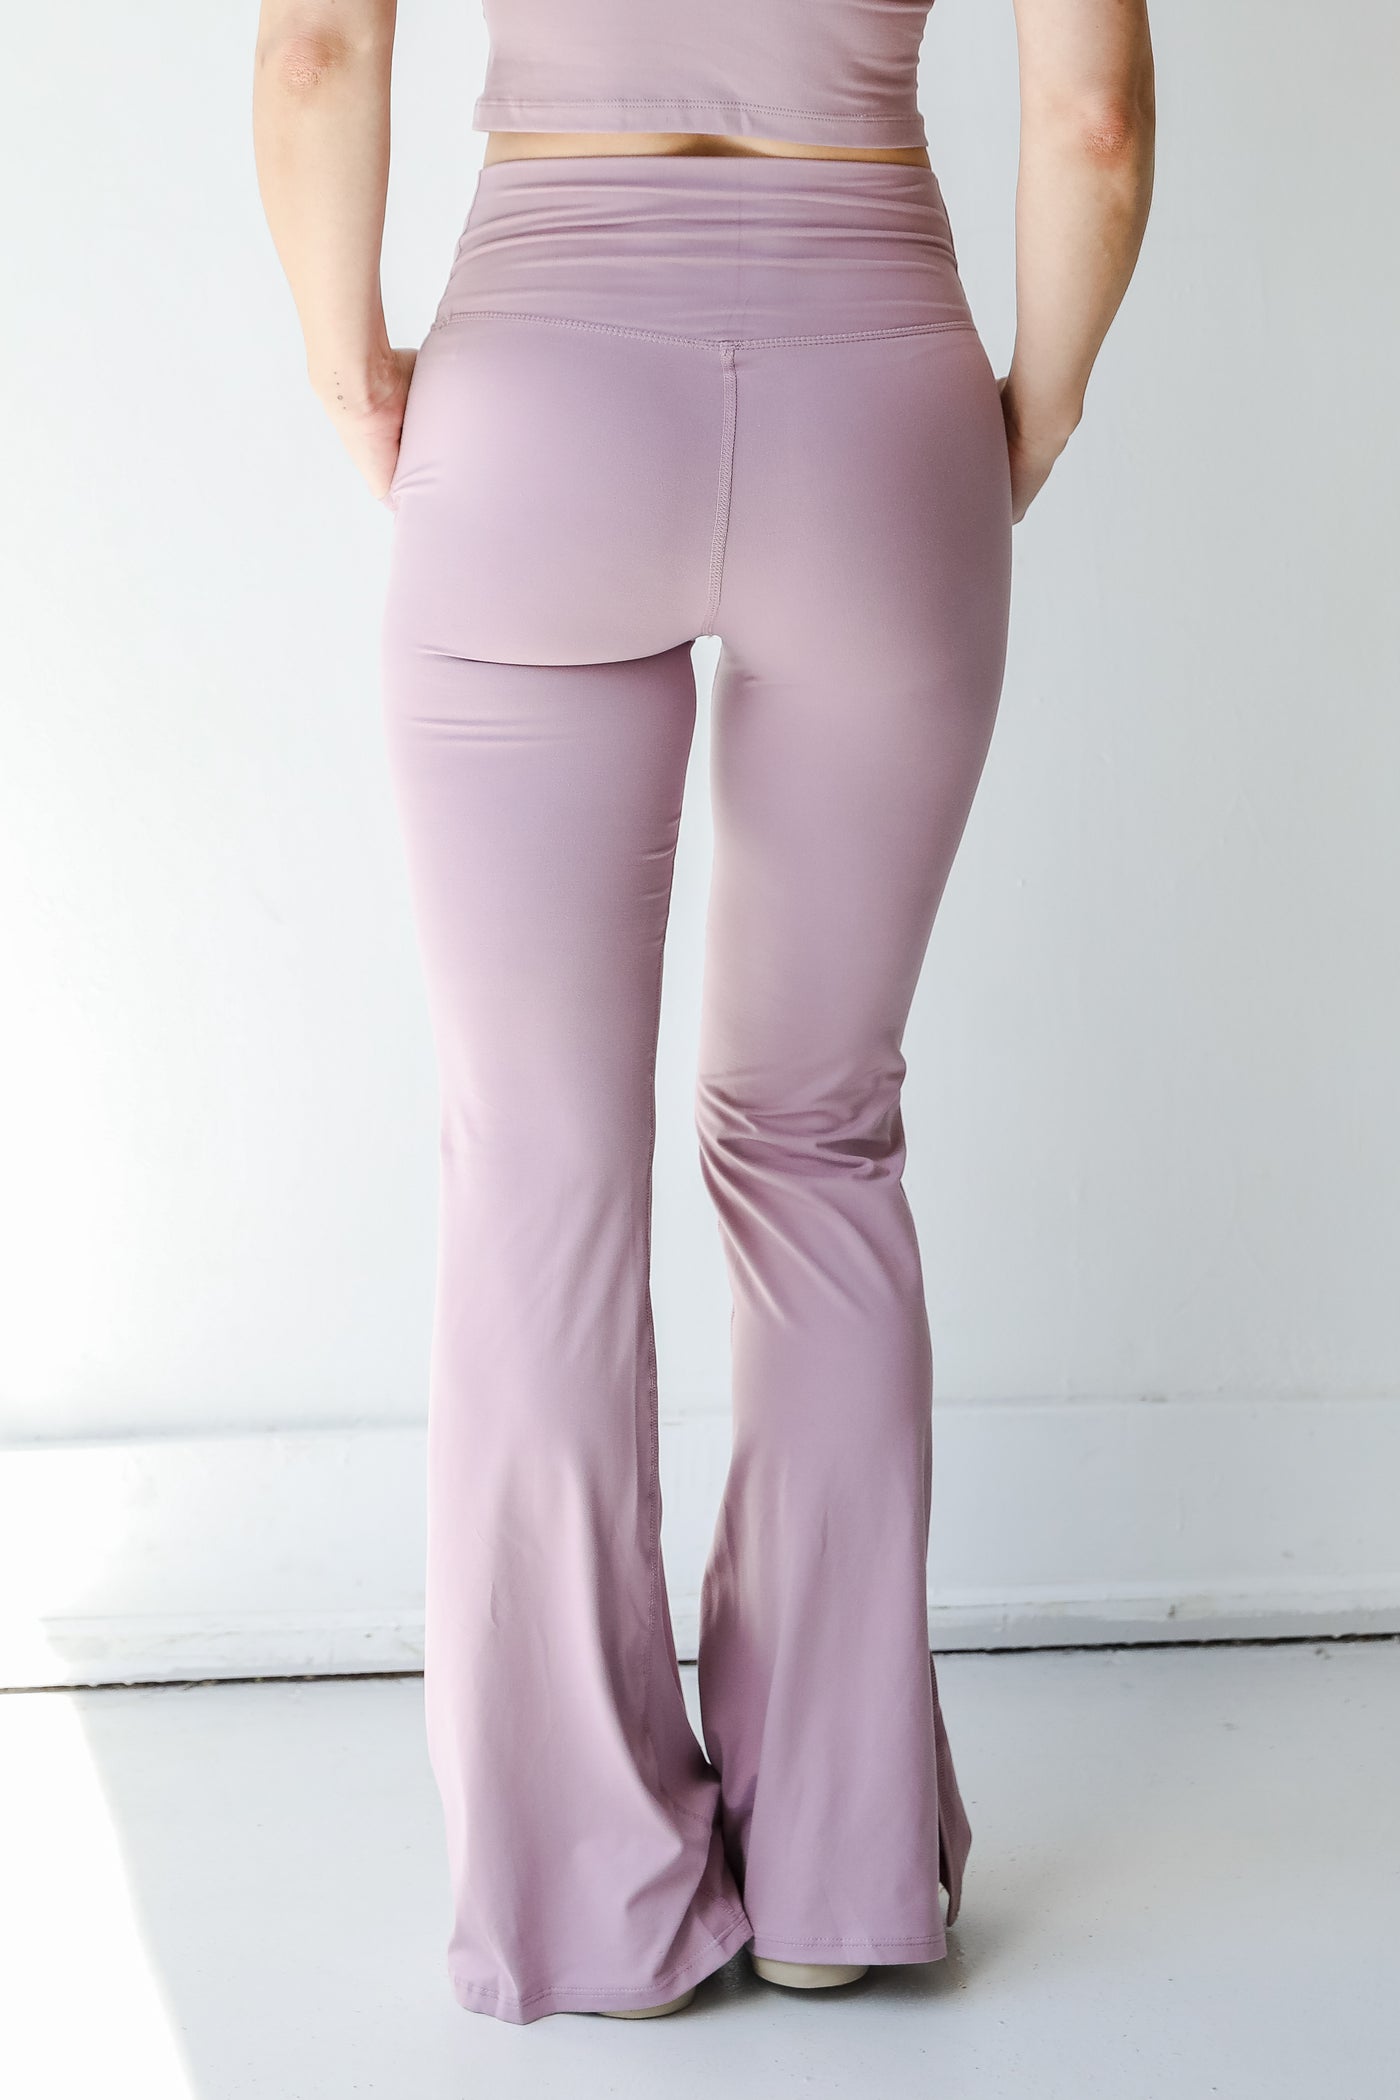 crossover flare leggings - light purple